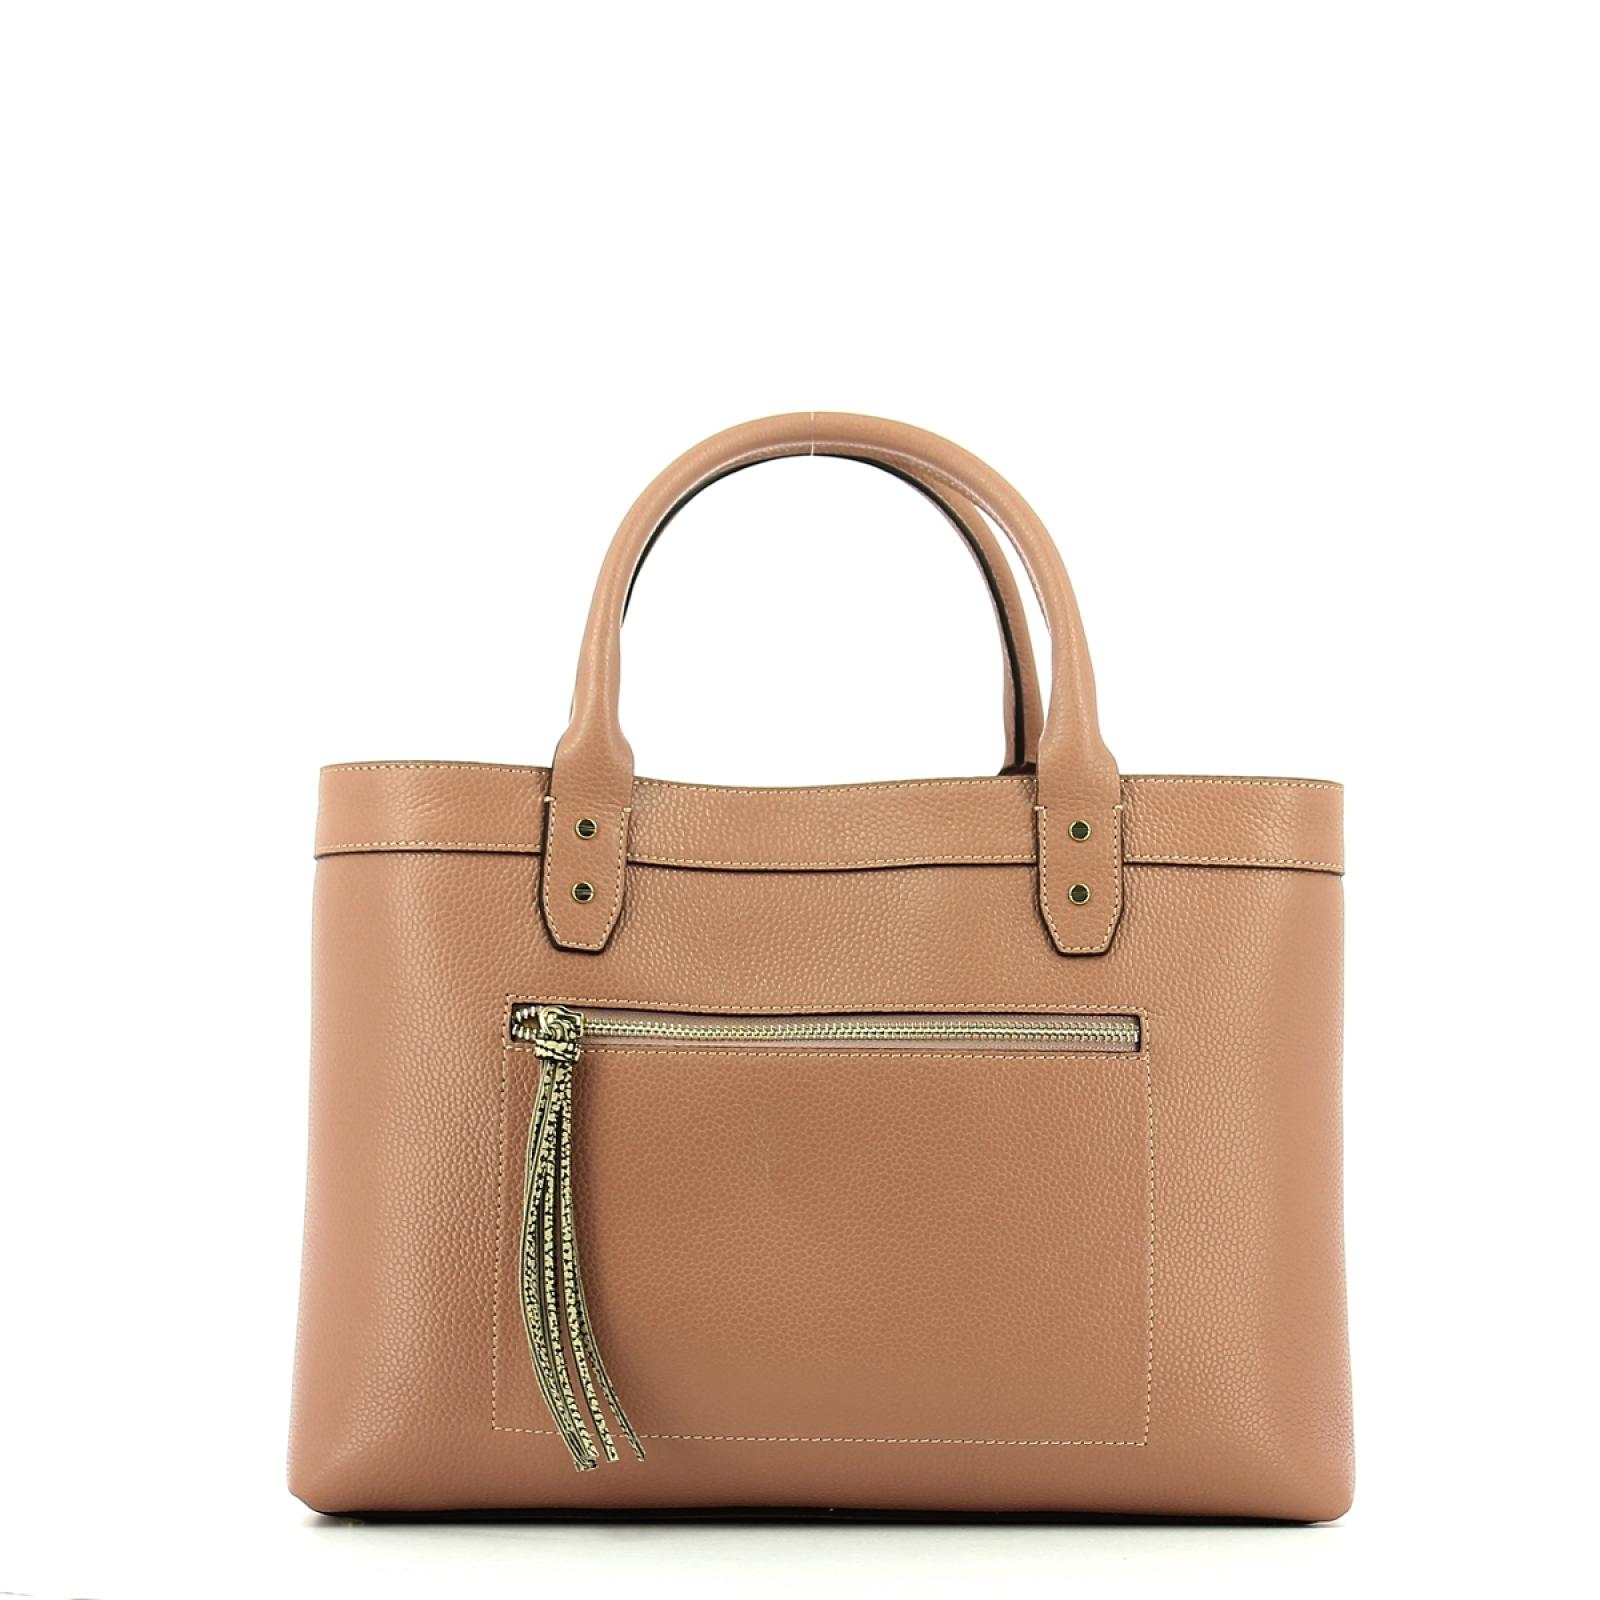 Leather handbag M